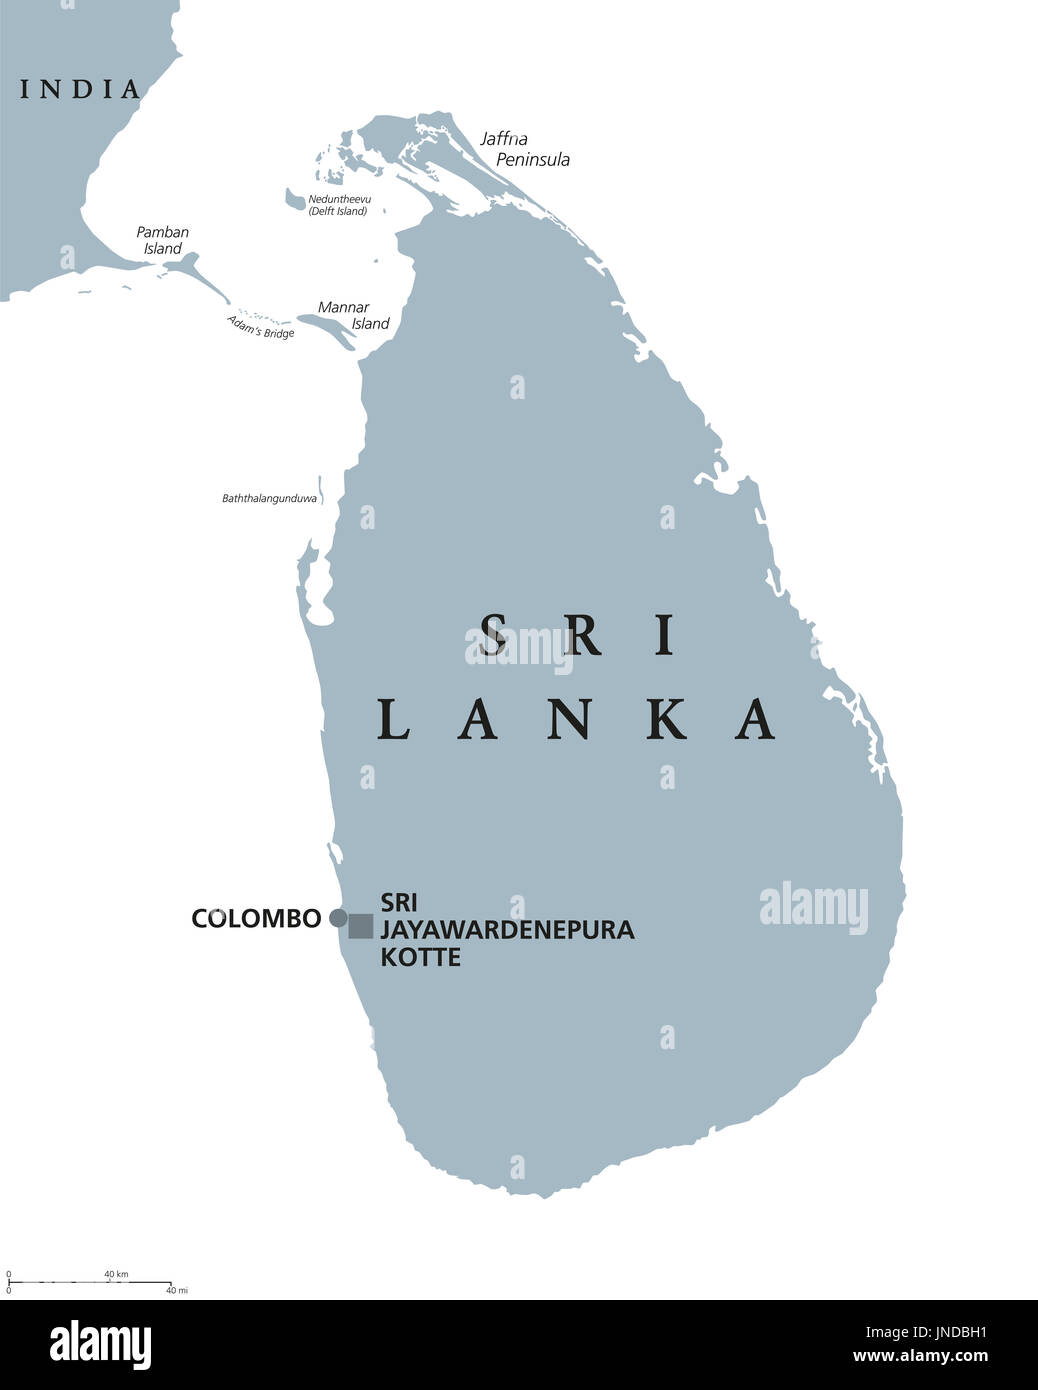 Sri Lanka political map with capitals Sri Jayawardenepura Kotte and Colombo. English labeling. Democratic Socialist Republic. Former Ceylon. Stock Photo